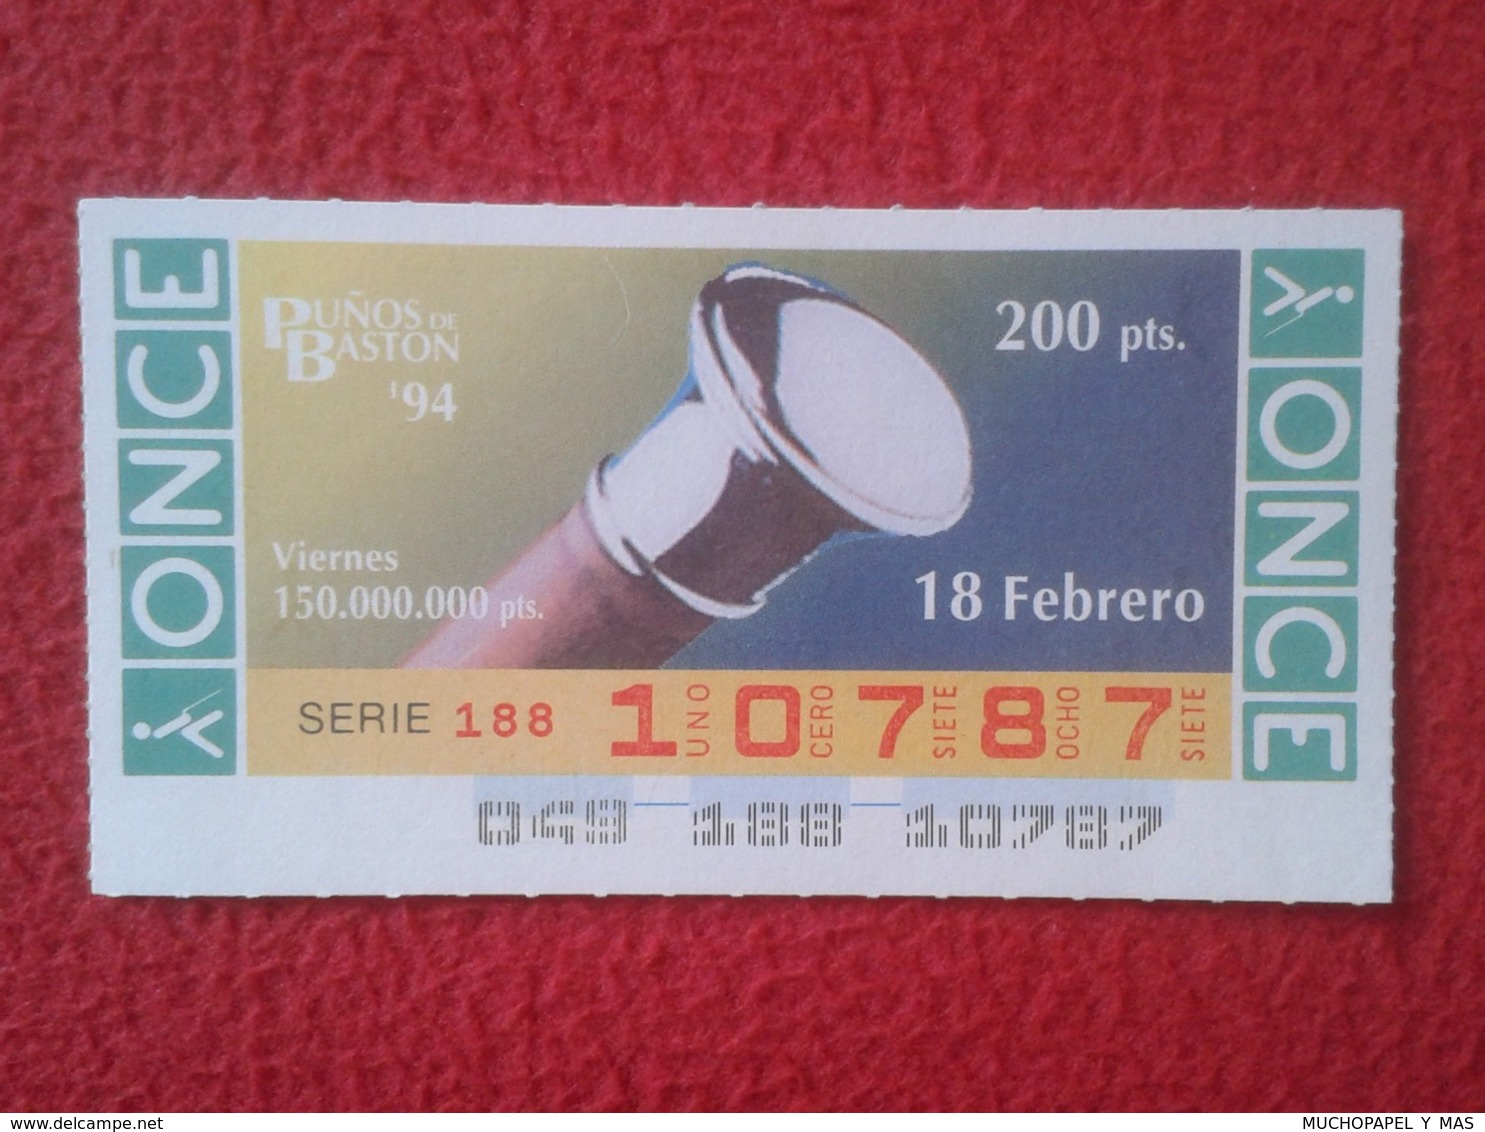 CUPÓN DE ONCE 1994 LOTTERY LOTERIE SPAIN BLIND LOTERÍA PUÑOS DE BASTÓN CANE CUFFS CUFF Poignets De Canne VER FOTOS Y DES - Loterijbiljetten